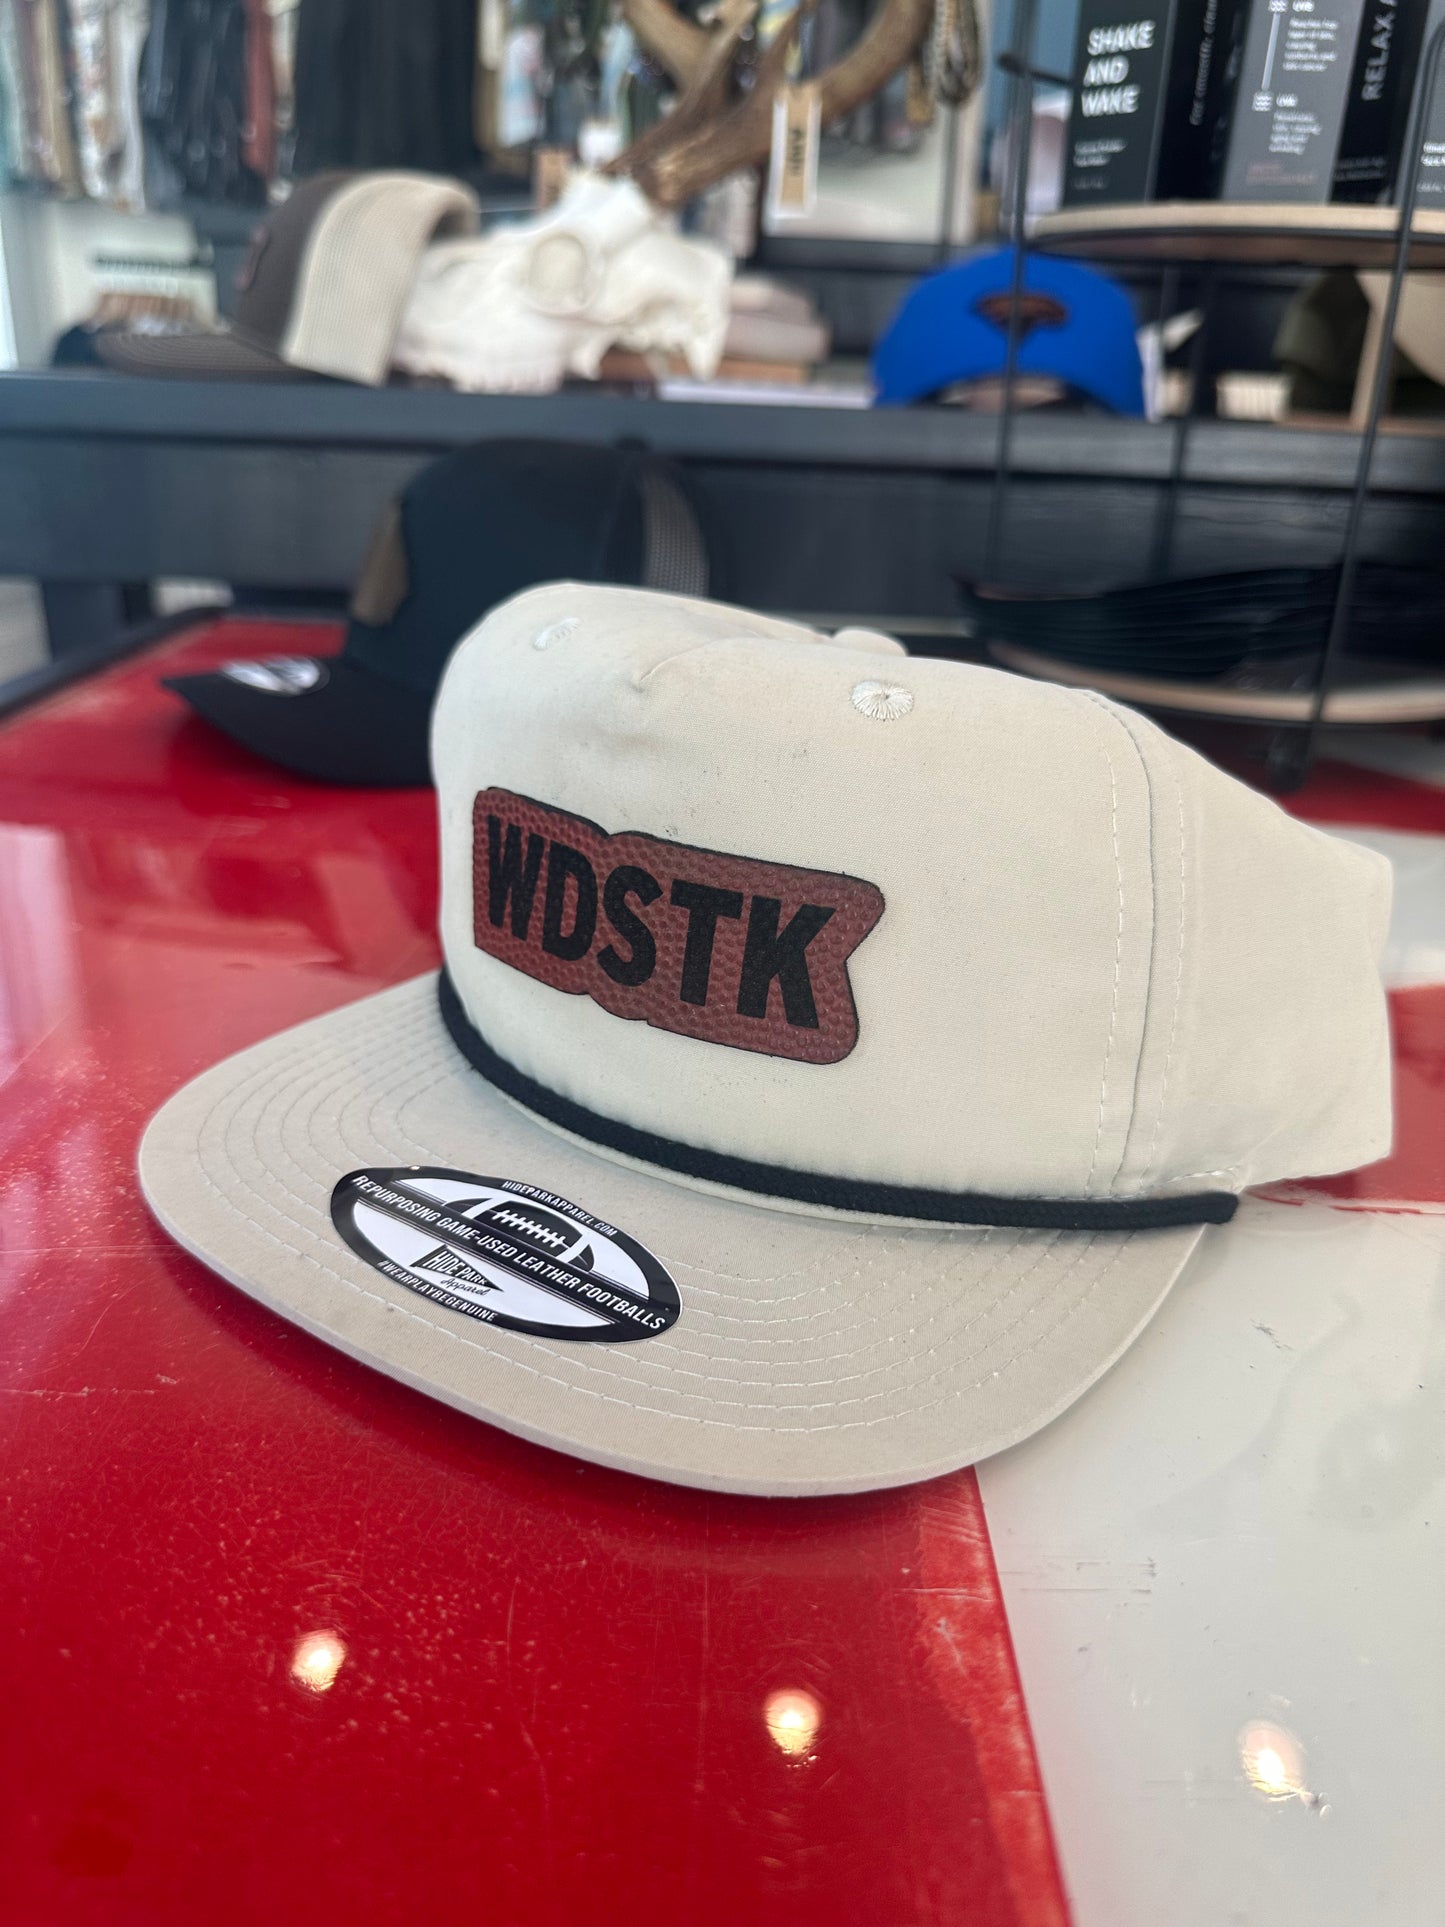 WDSTK Hat